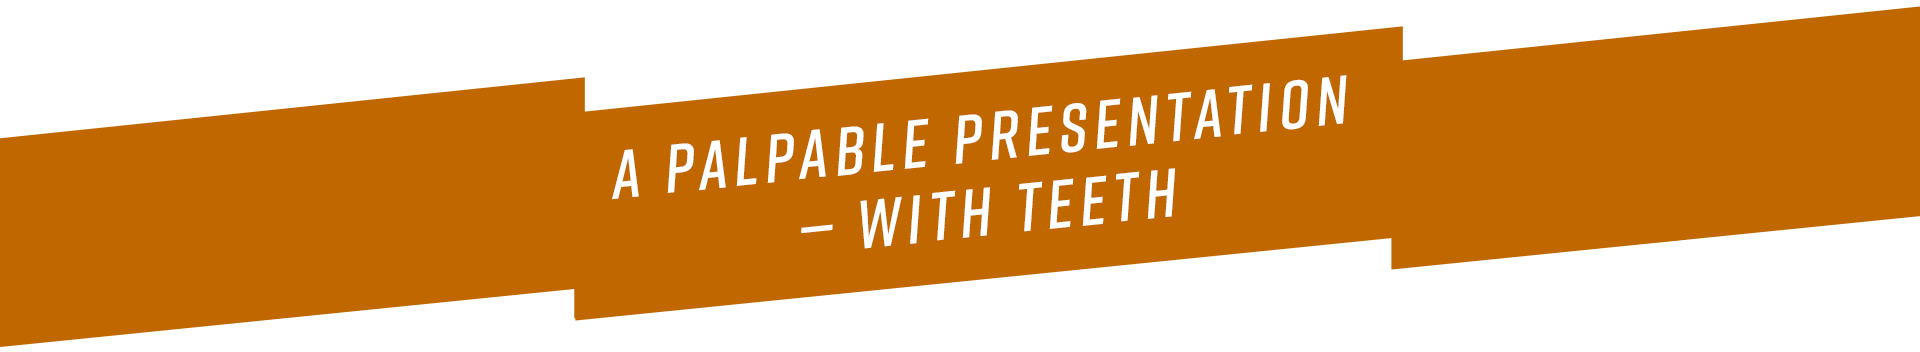 A Palpable Presentation With Teeth